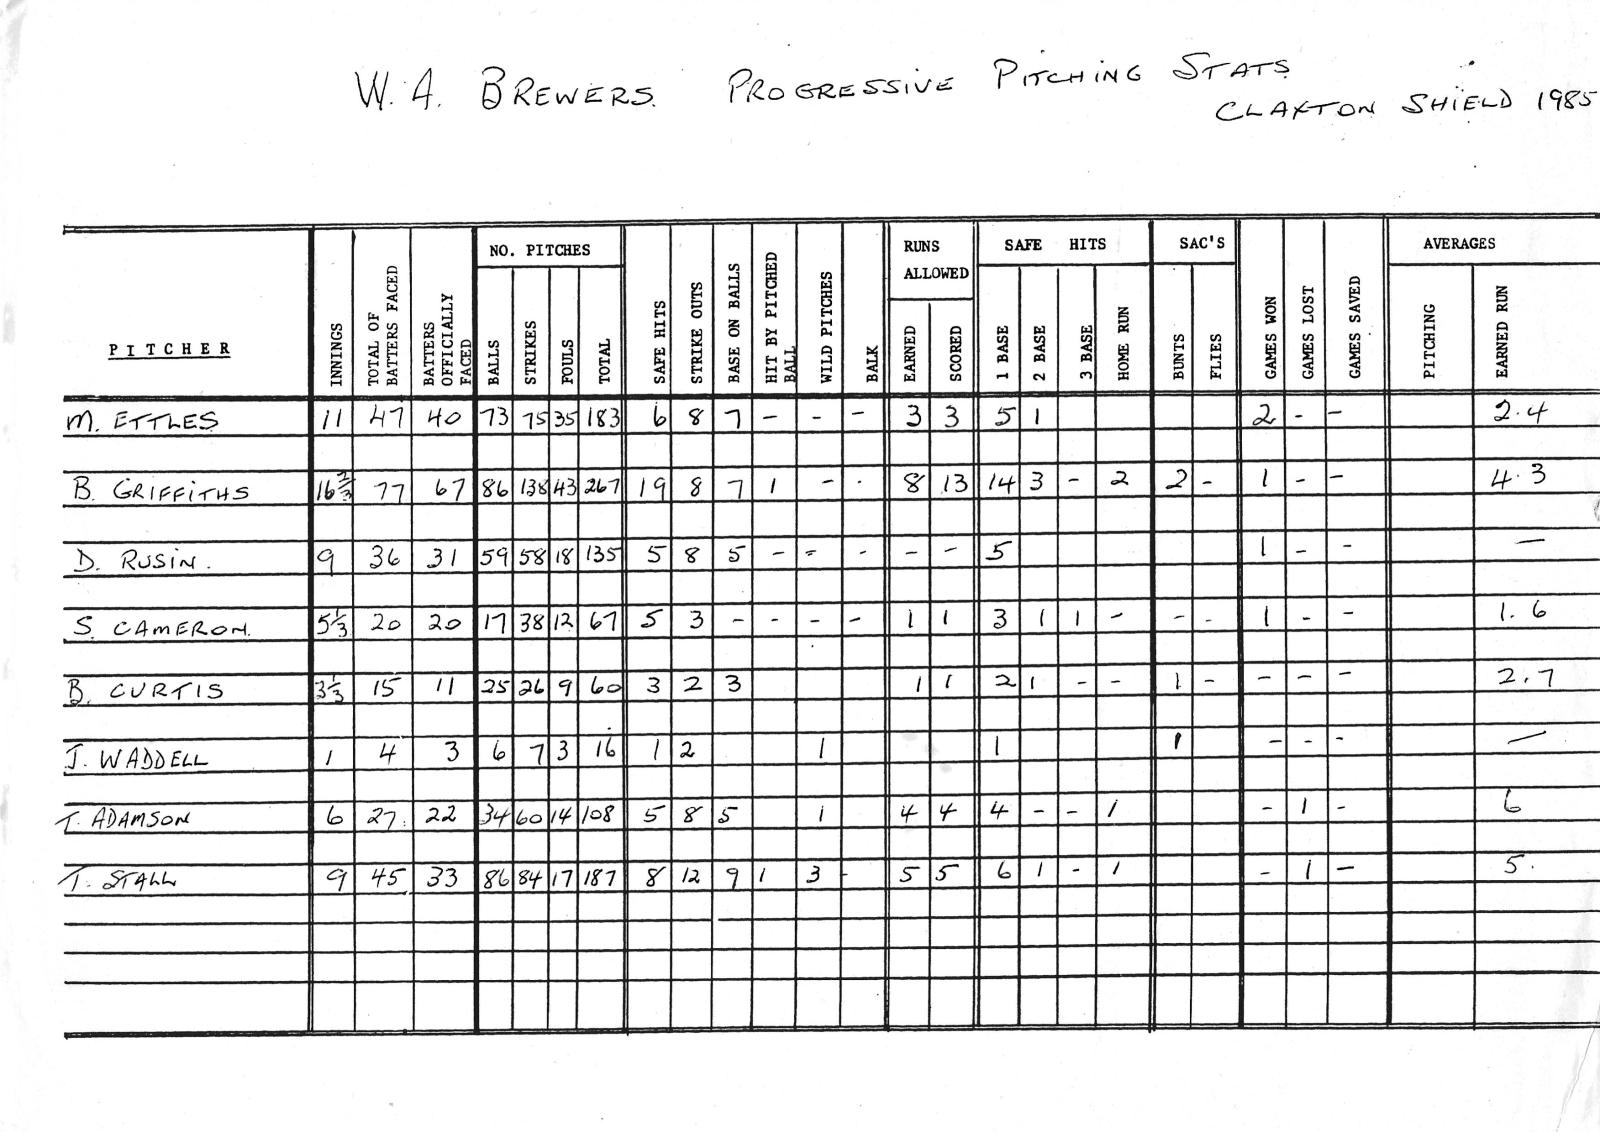 WA Brewers progressive pitcher stats - 1985 Claxton Shield